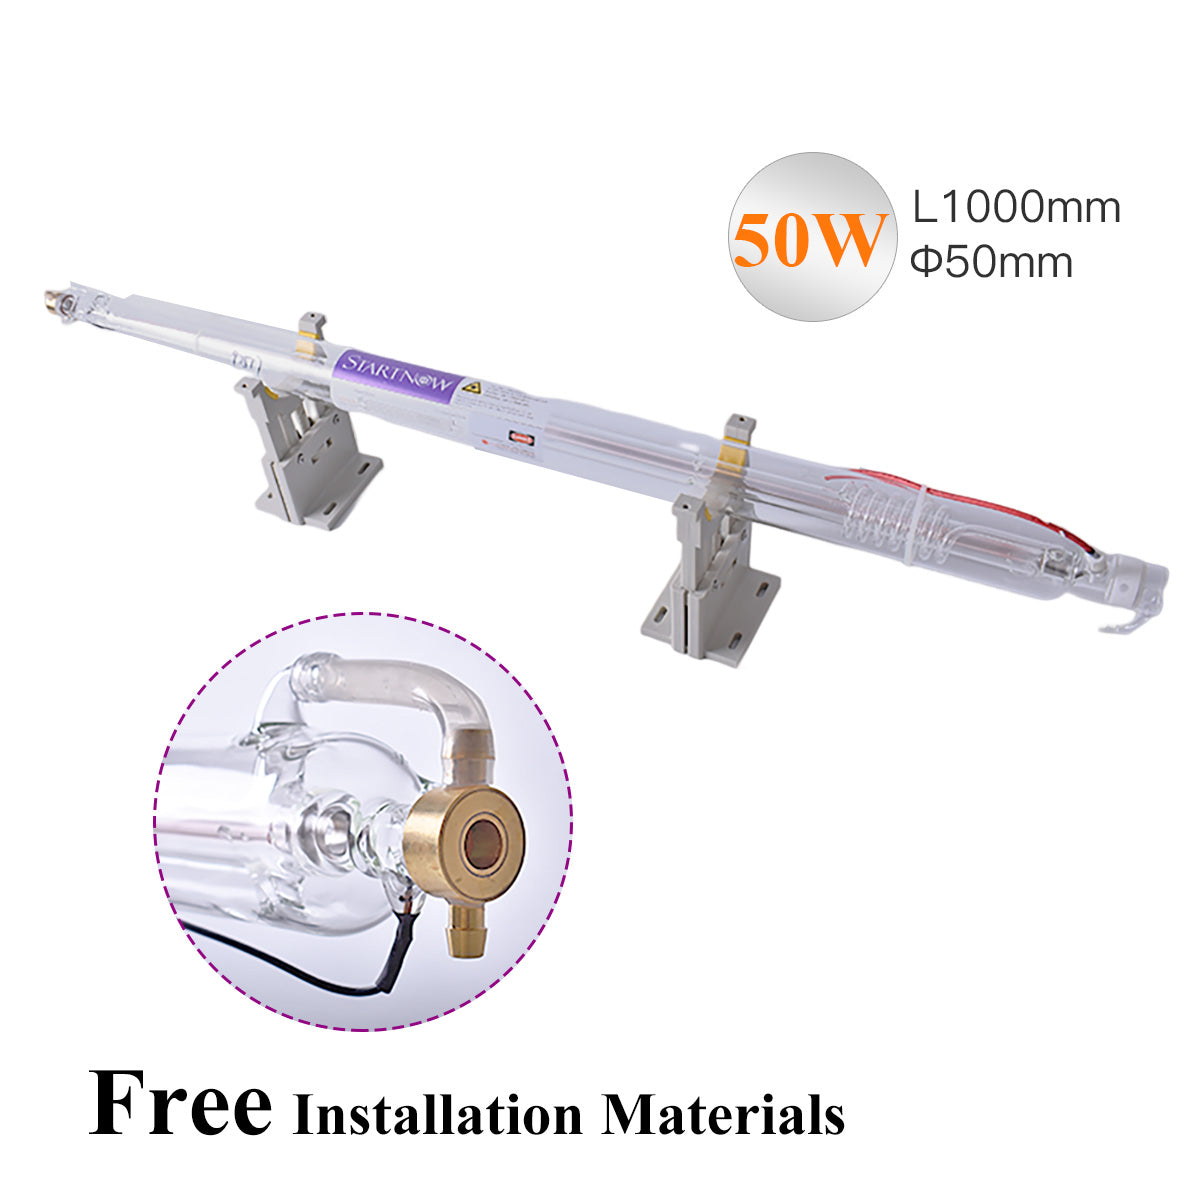 50W 1000mm CO2 Laser Glass Tube For Laser Engraver Carving Machine